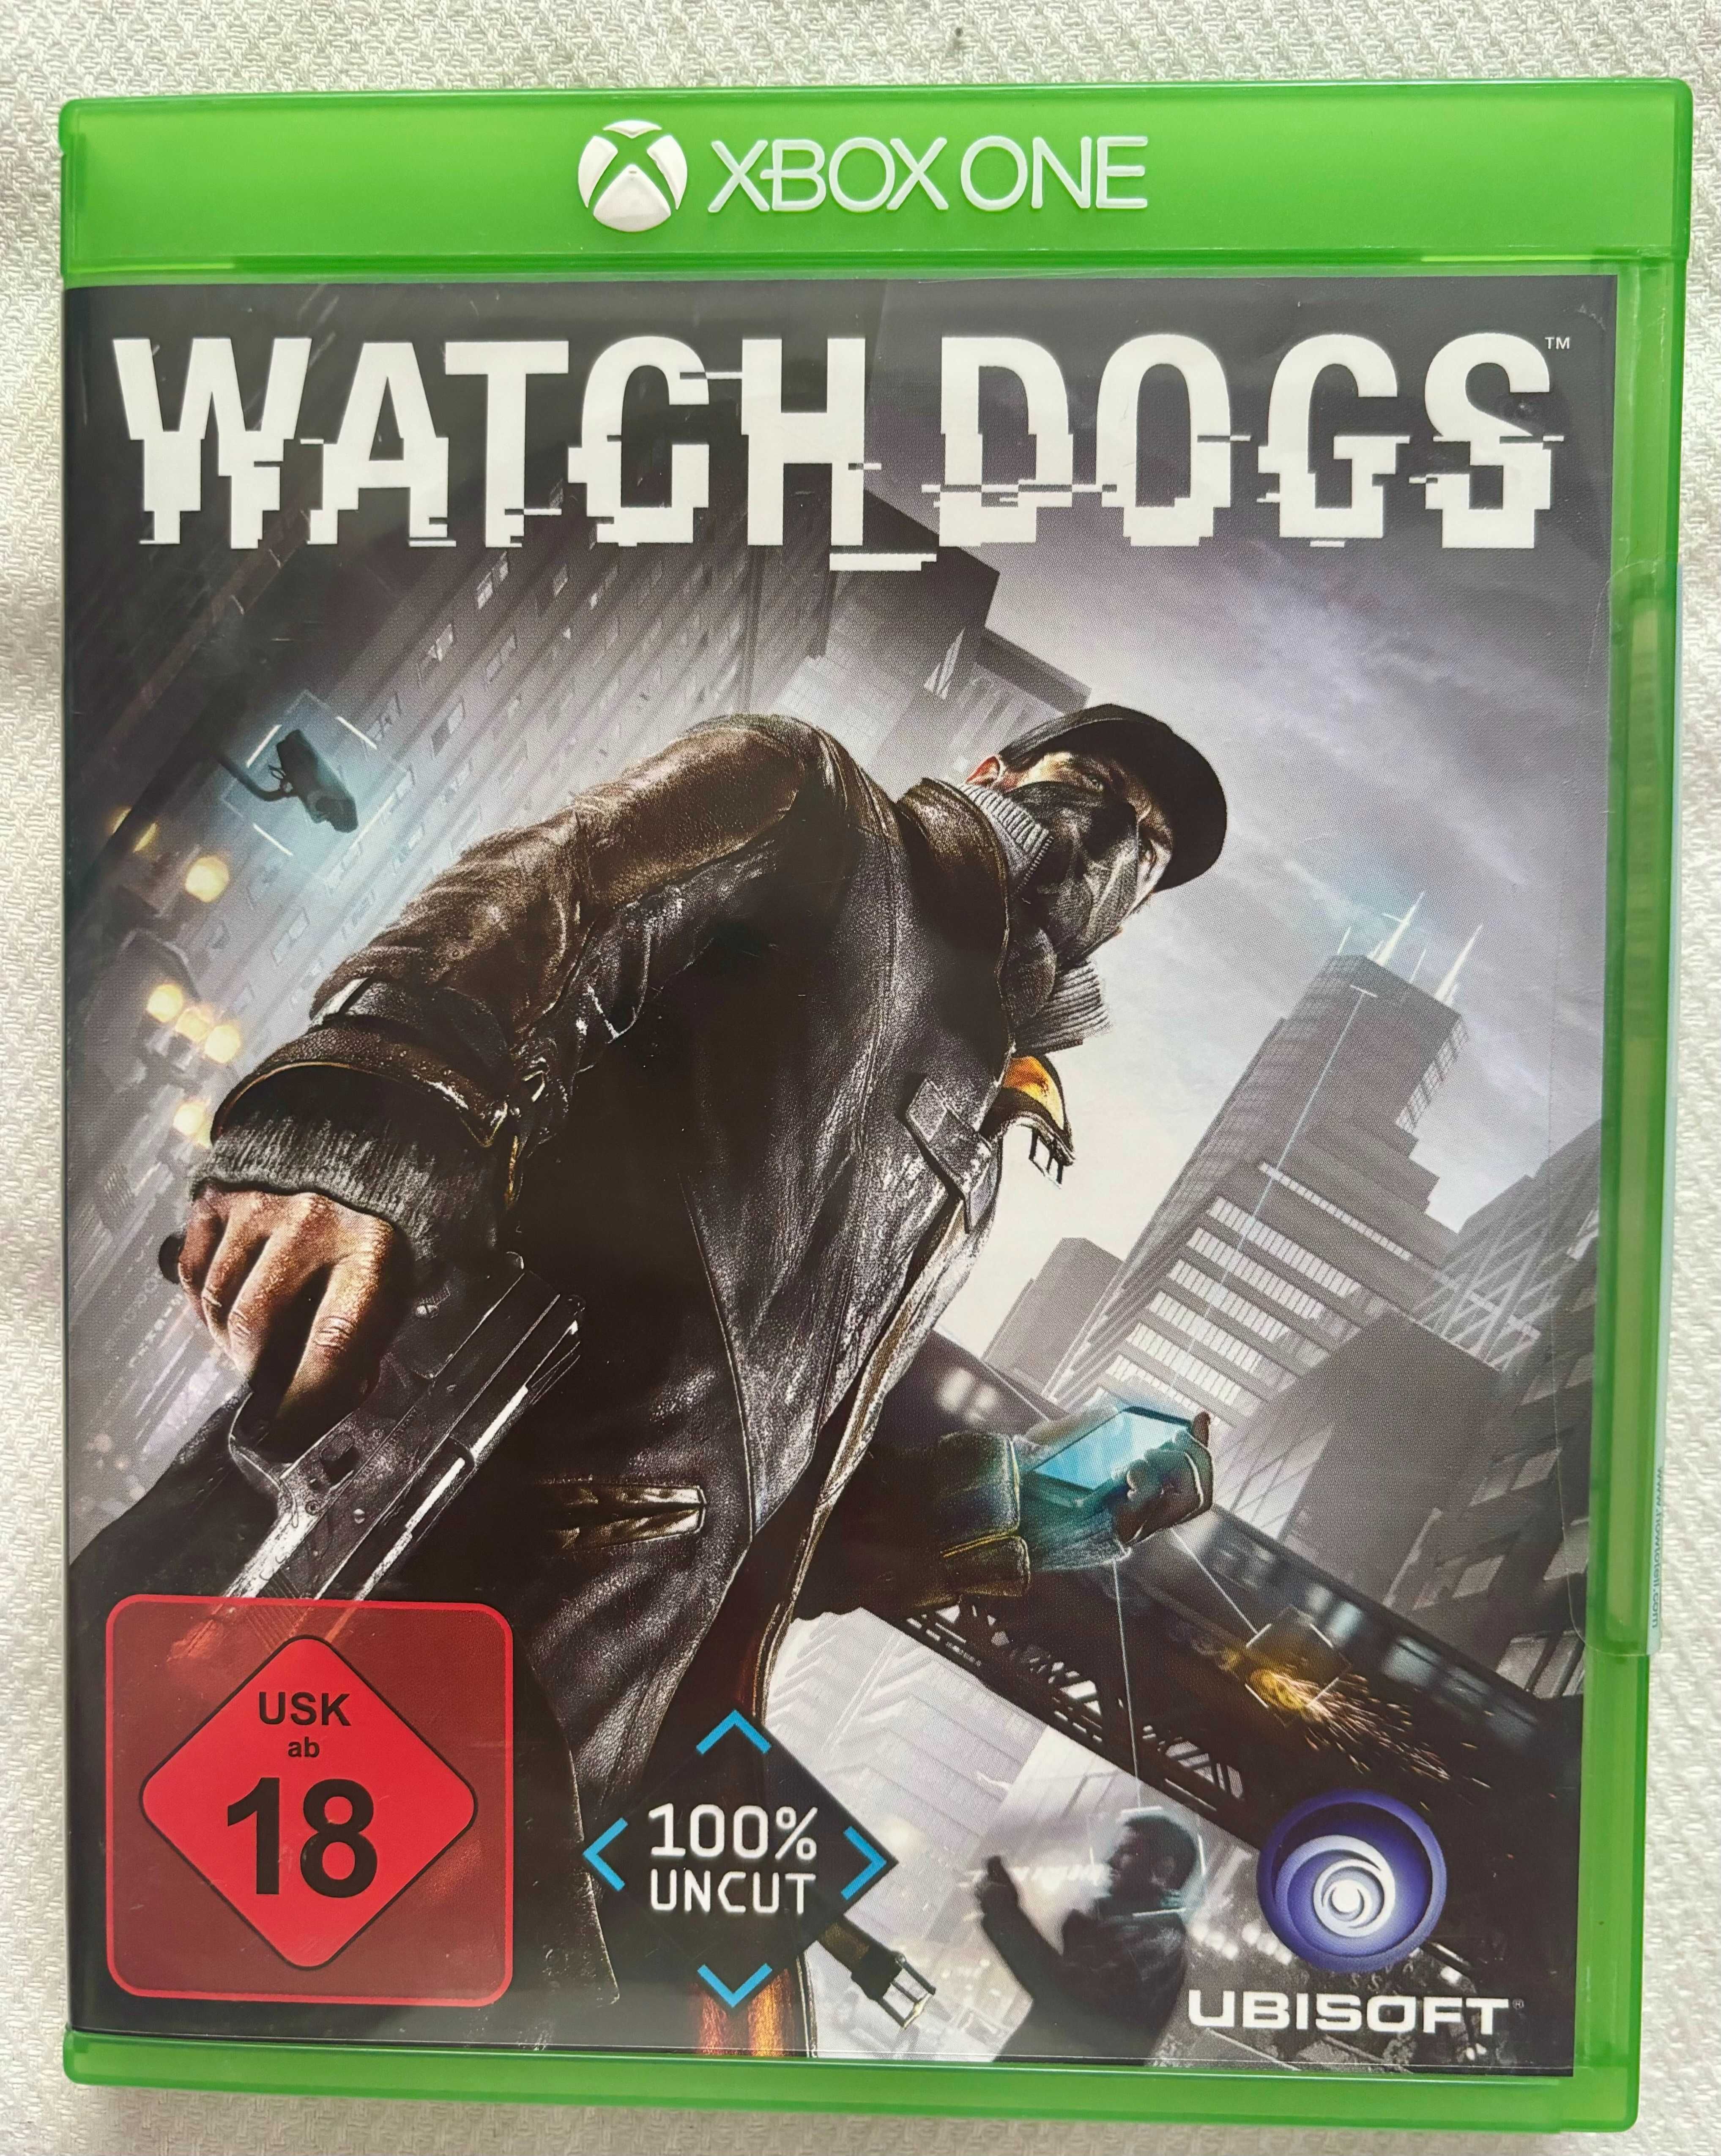 Jocuri Xbox One - Fifa19, Watch Dogs, NBA2k17